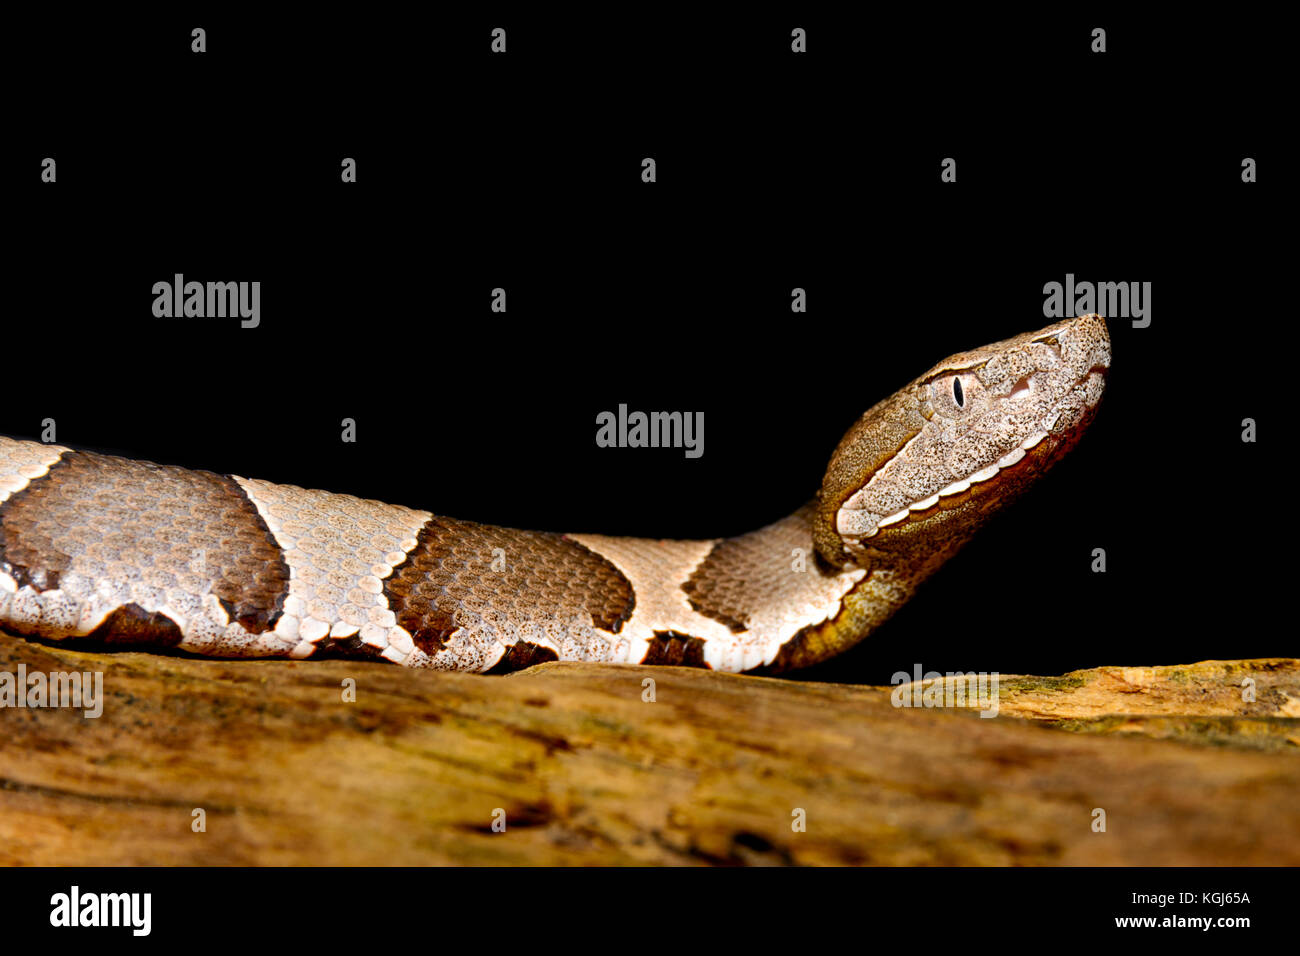 Broad-Band Copperhead snake (Agkistrodon contortrix laticinctus) on black background Stock Photo